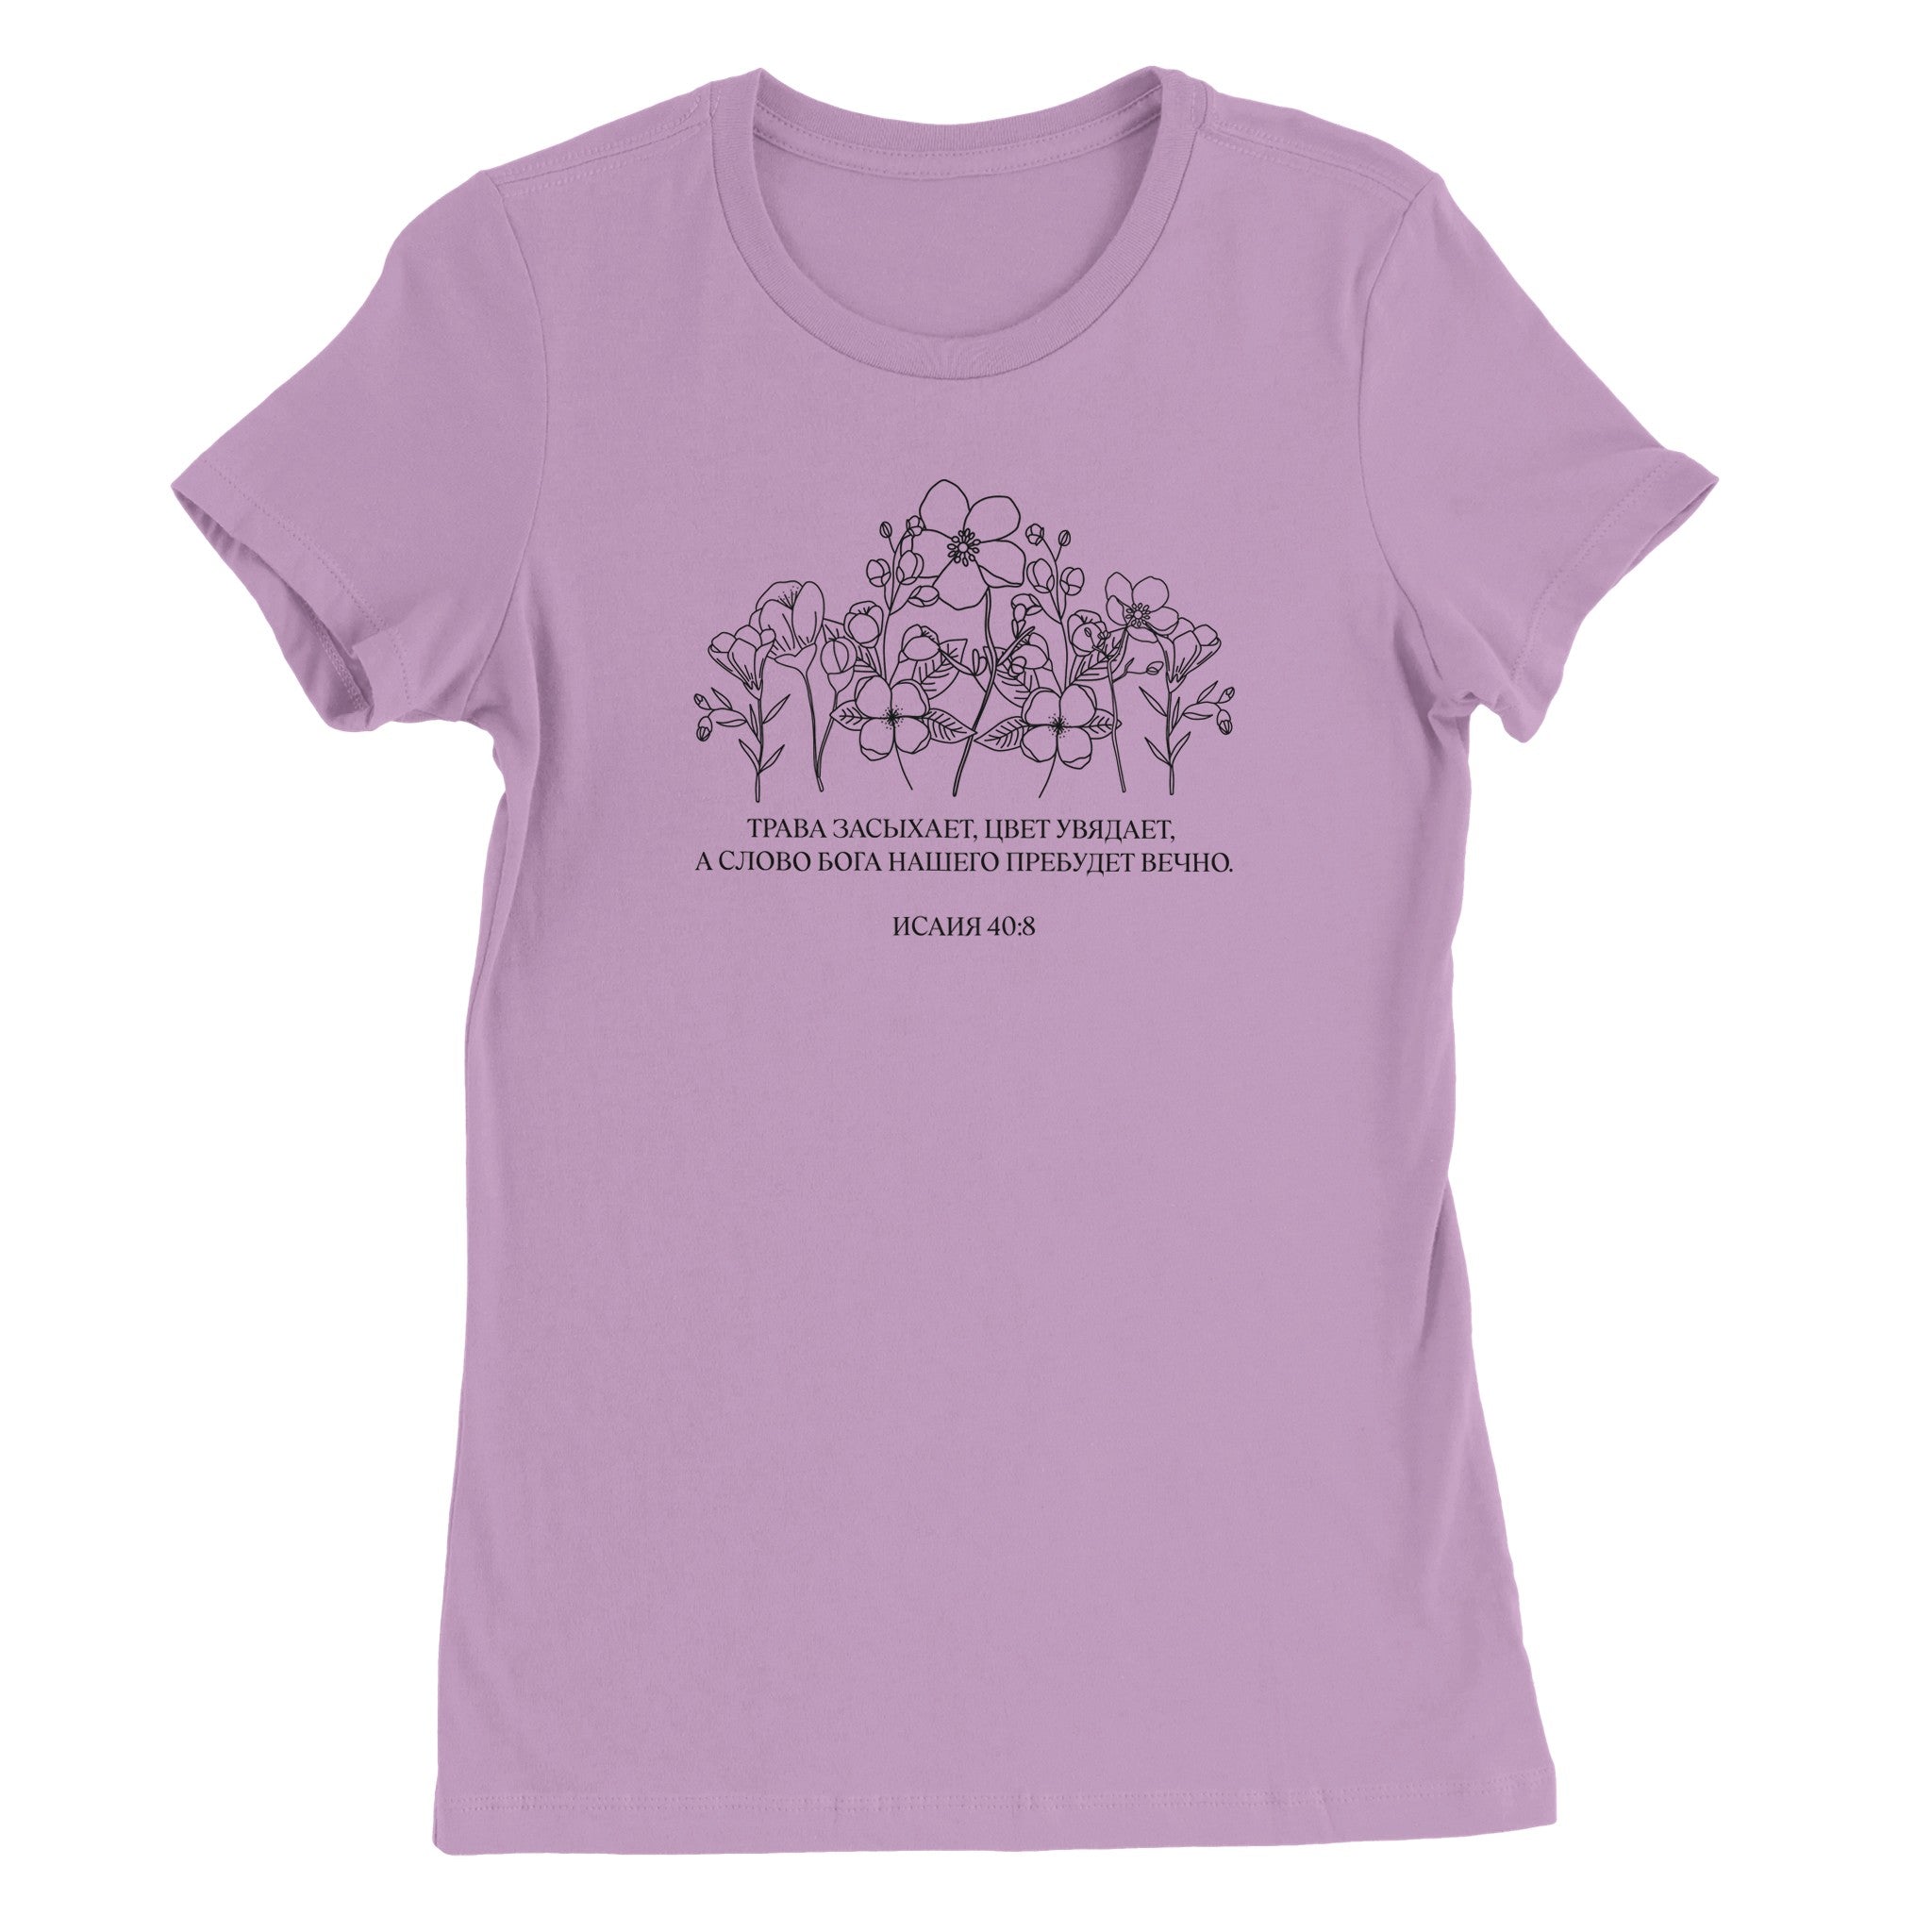 Women's Crewneck T-Shirt